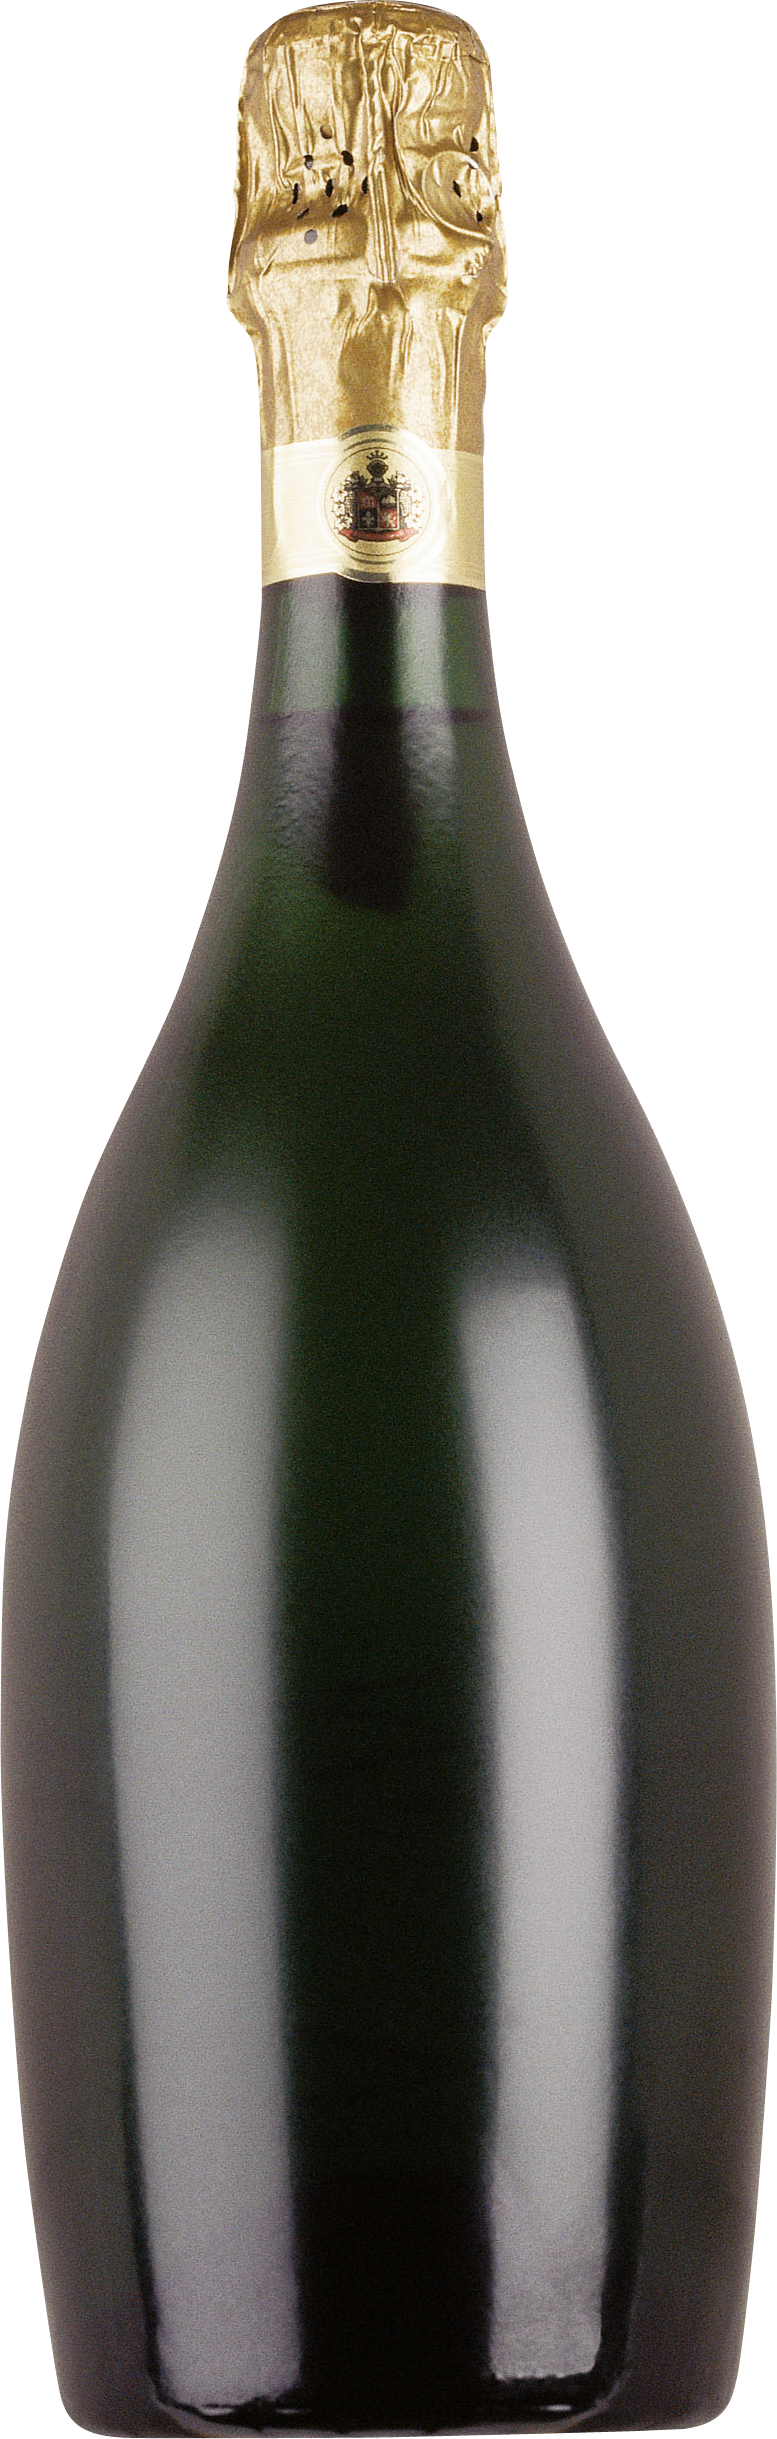 Champagne bottle PNG image